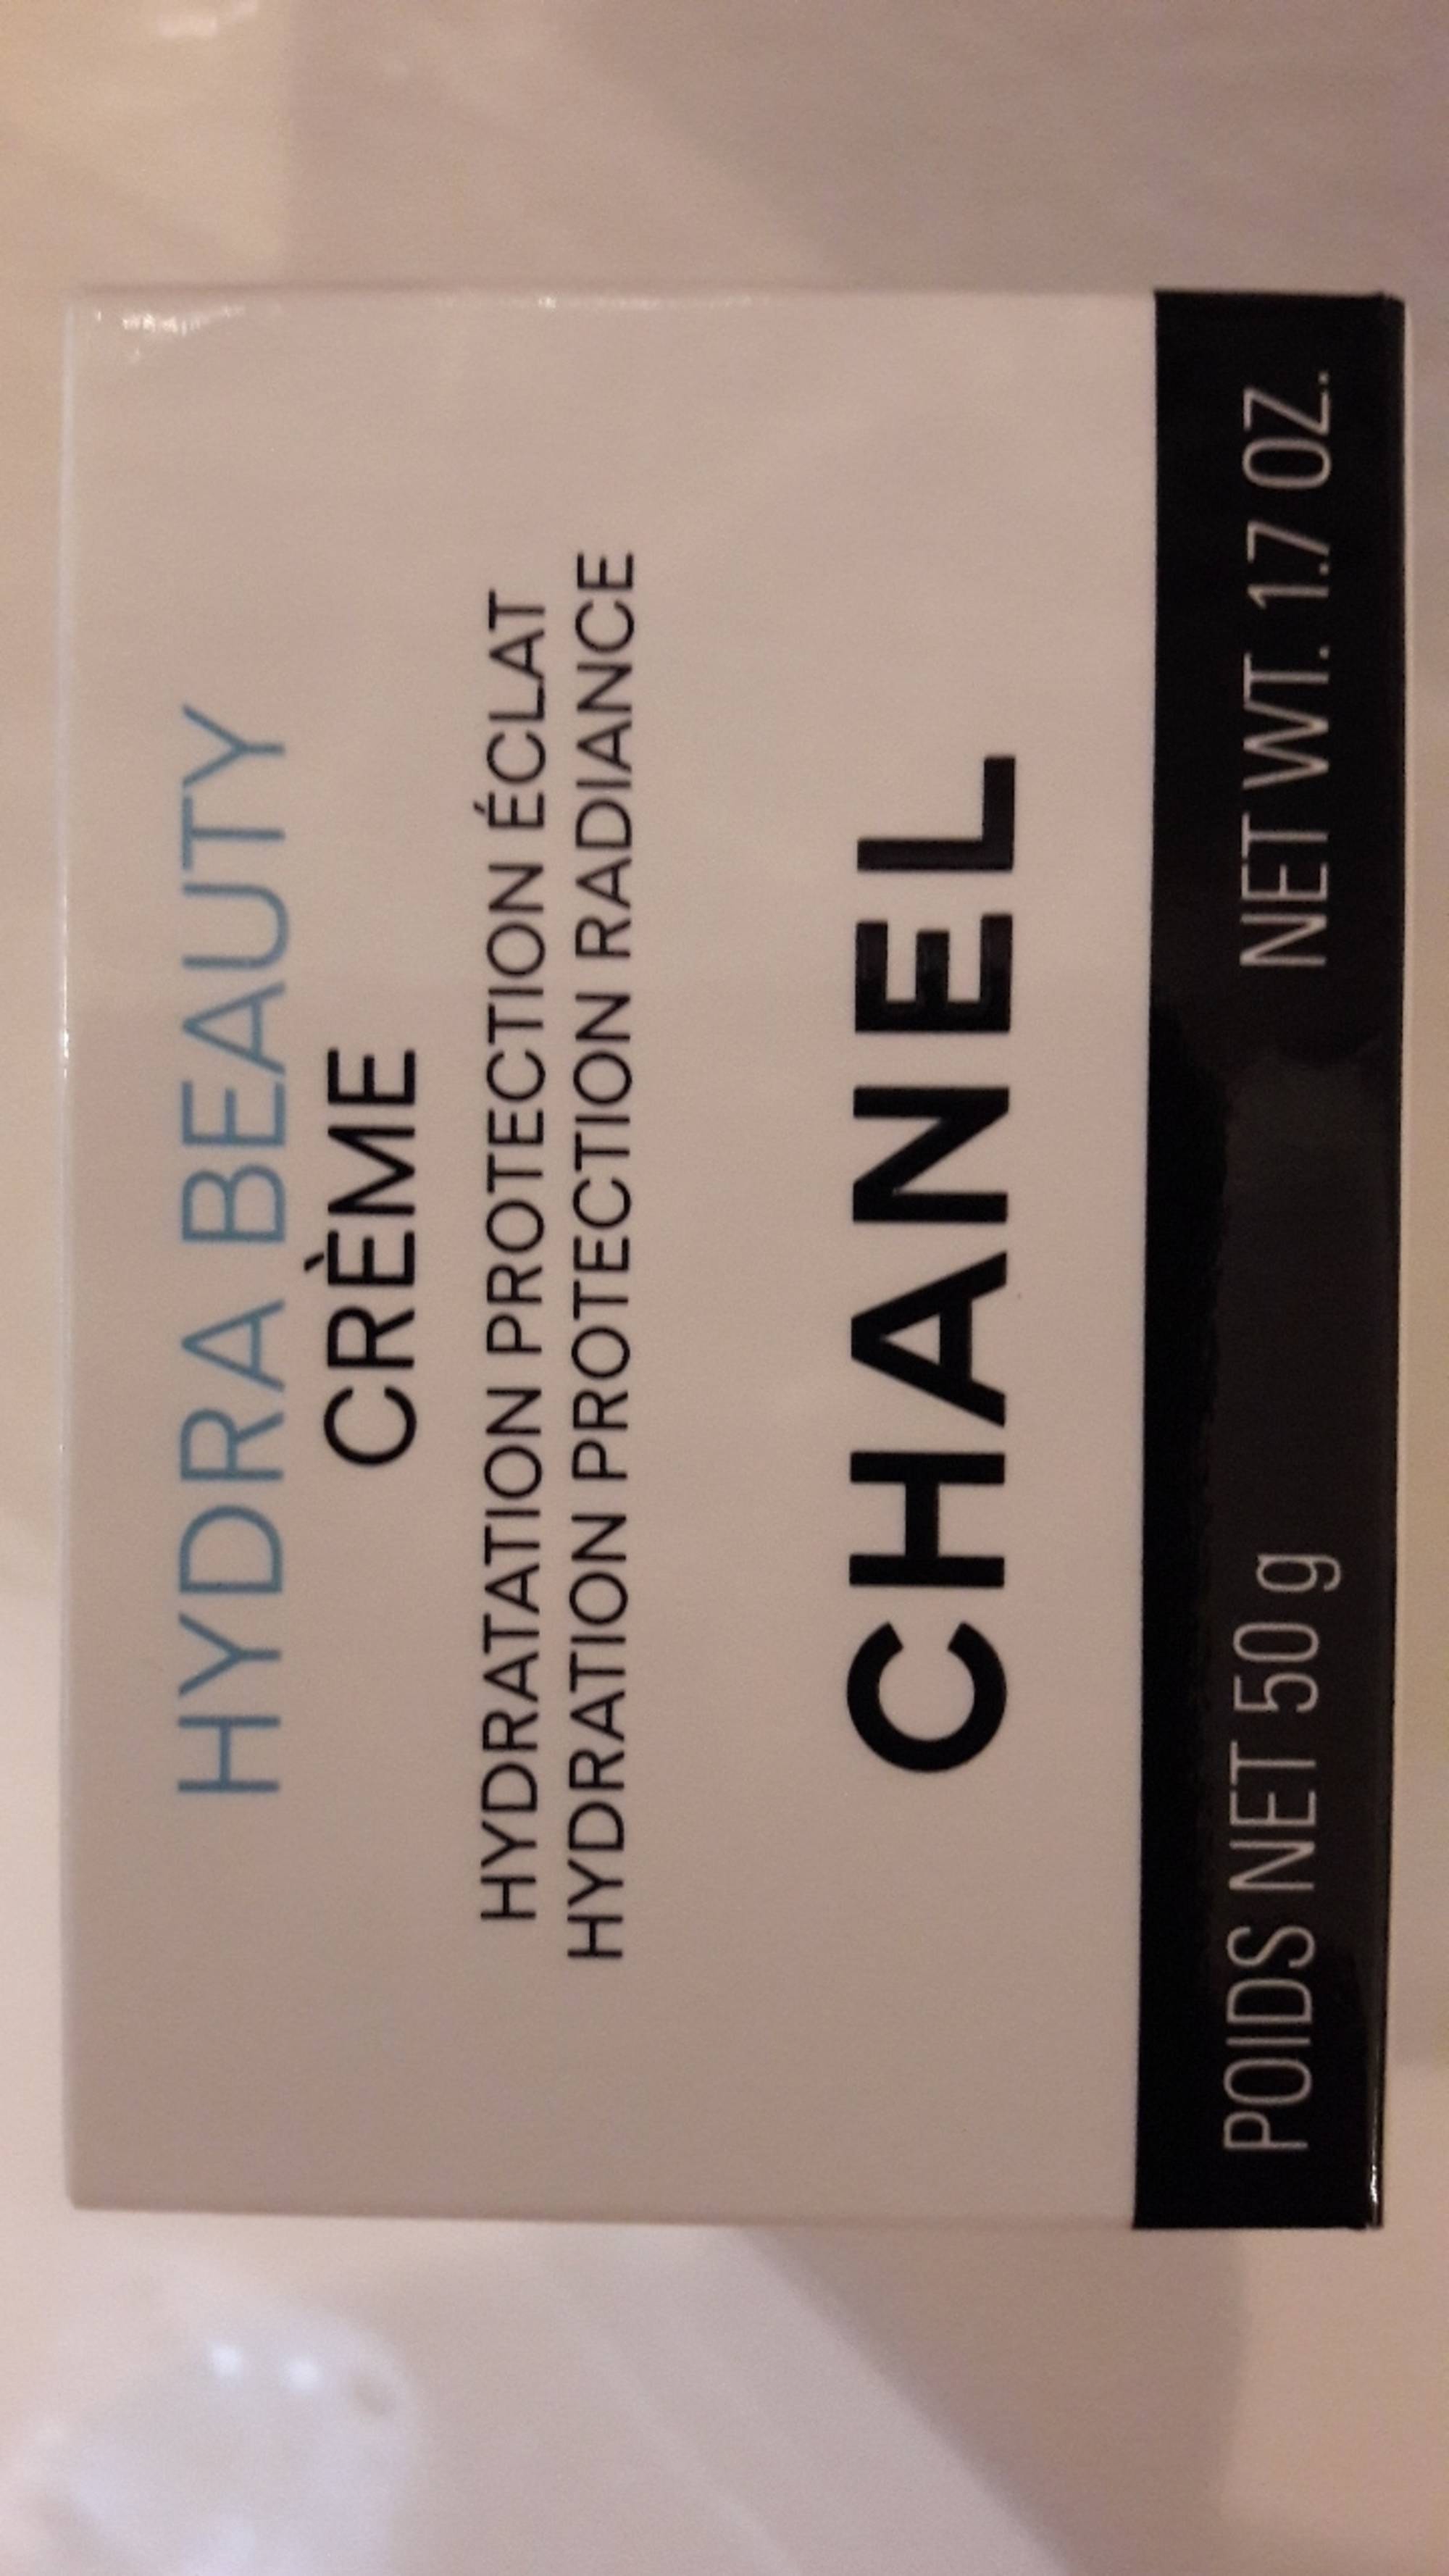 CHANEL - Hydra beauty - Crème hydratation protection éclat